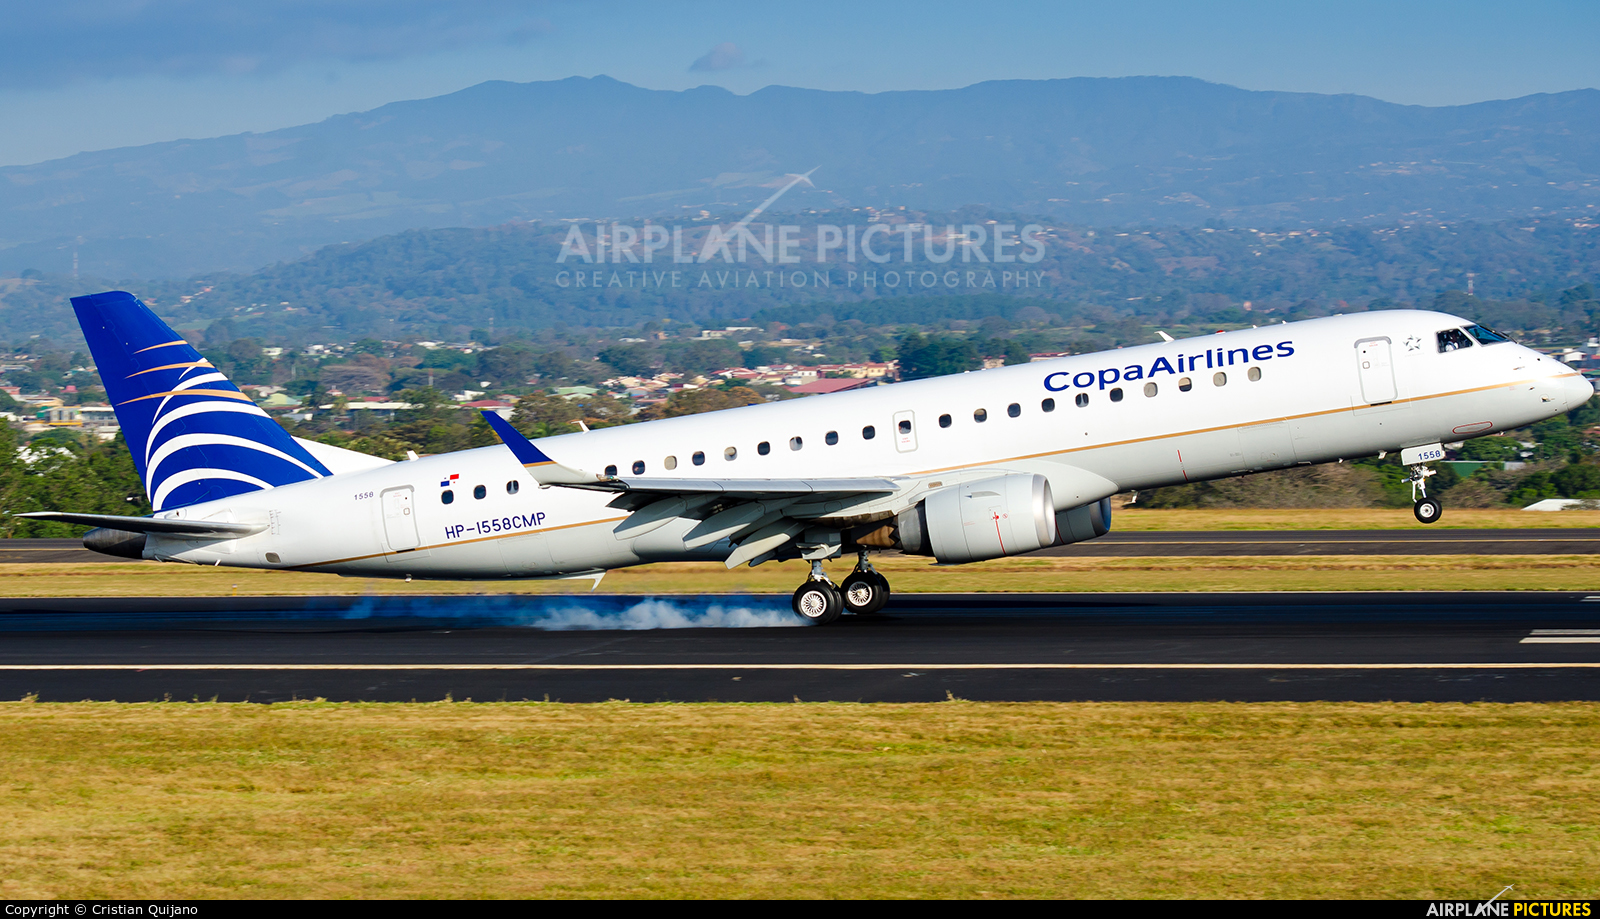 Copa Airlines HP-1558CMP aircraft at San Jose - Juan Santamaría Intl